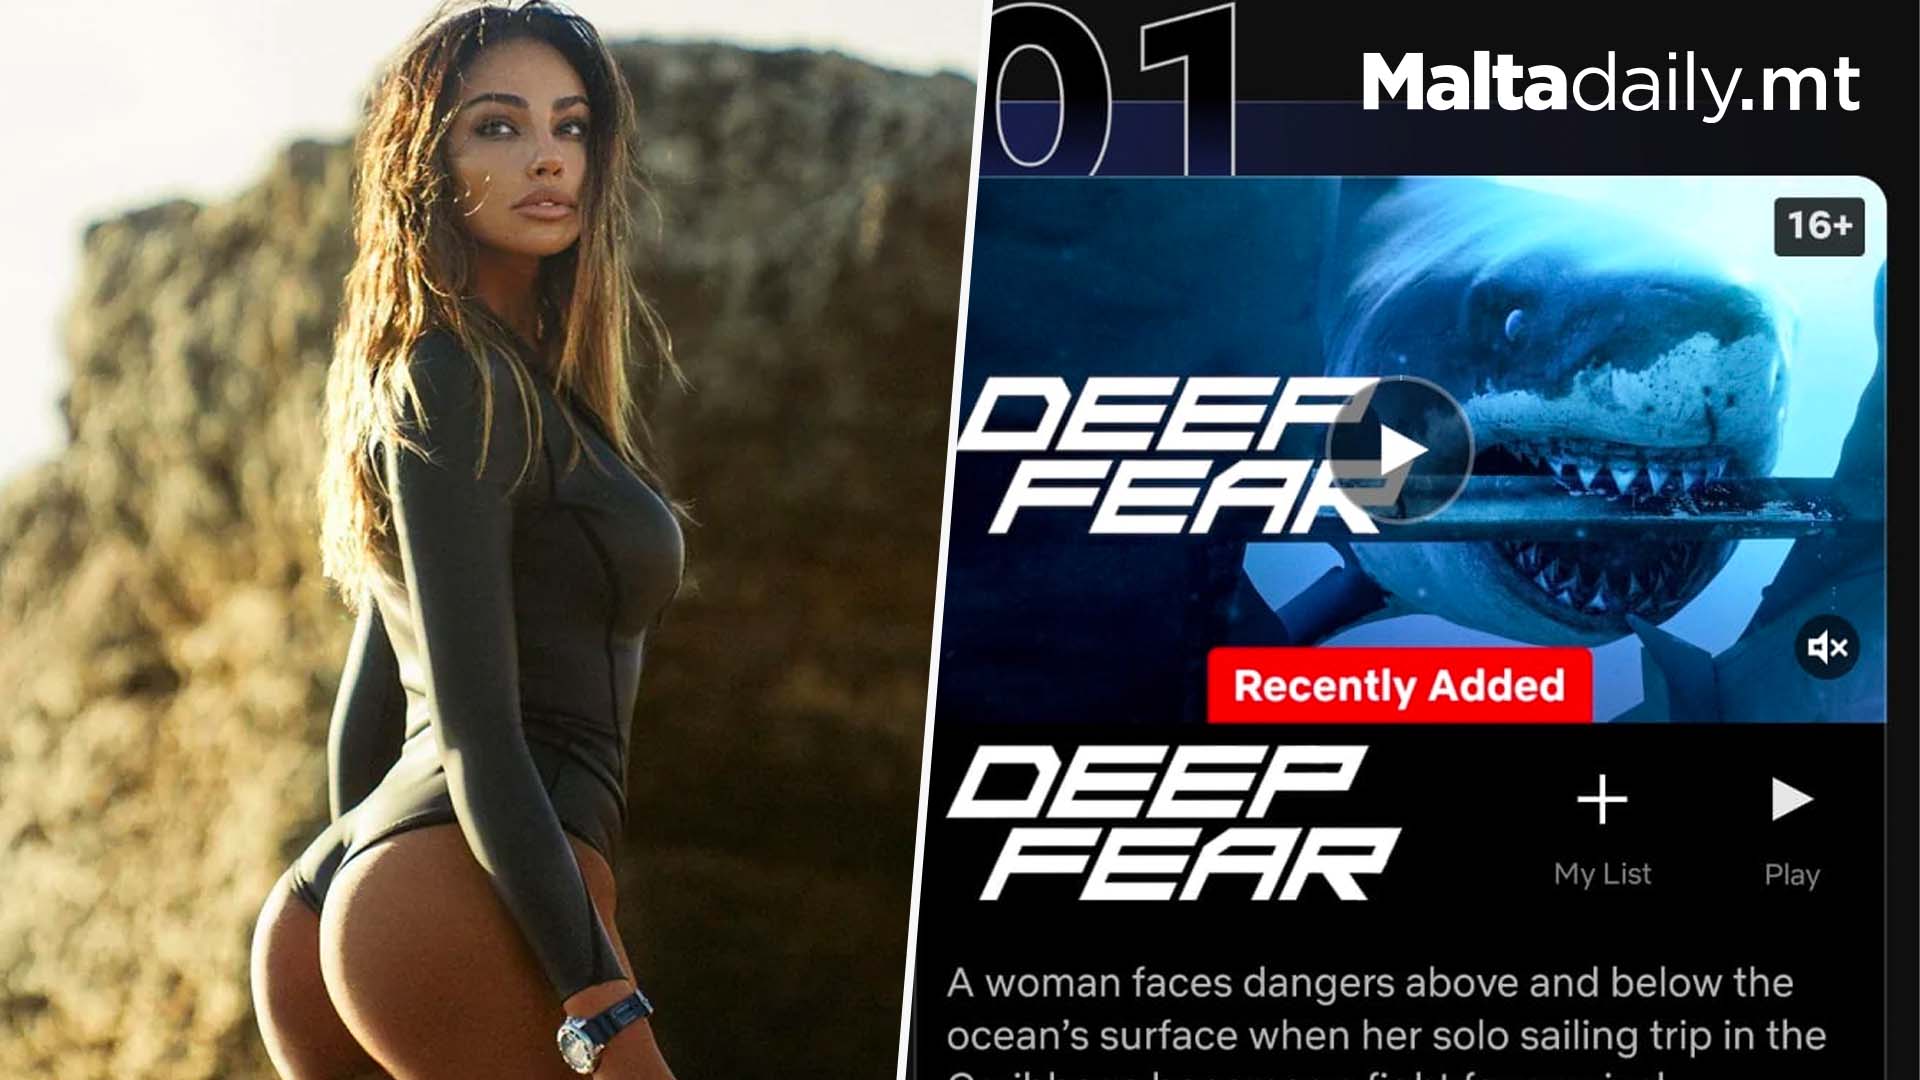 Malta Filmed 'Deep Fear' Makes It To Top 1 & 2 On Netflix